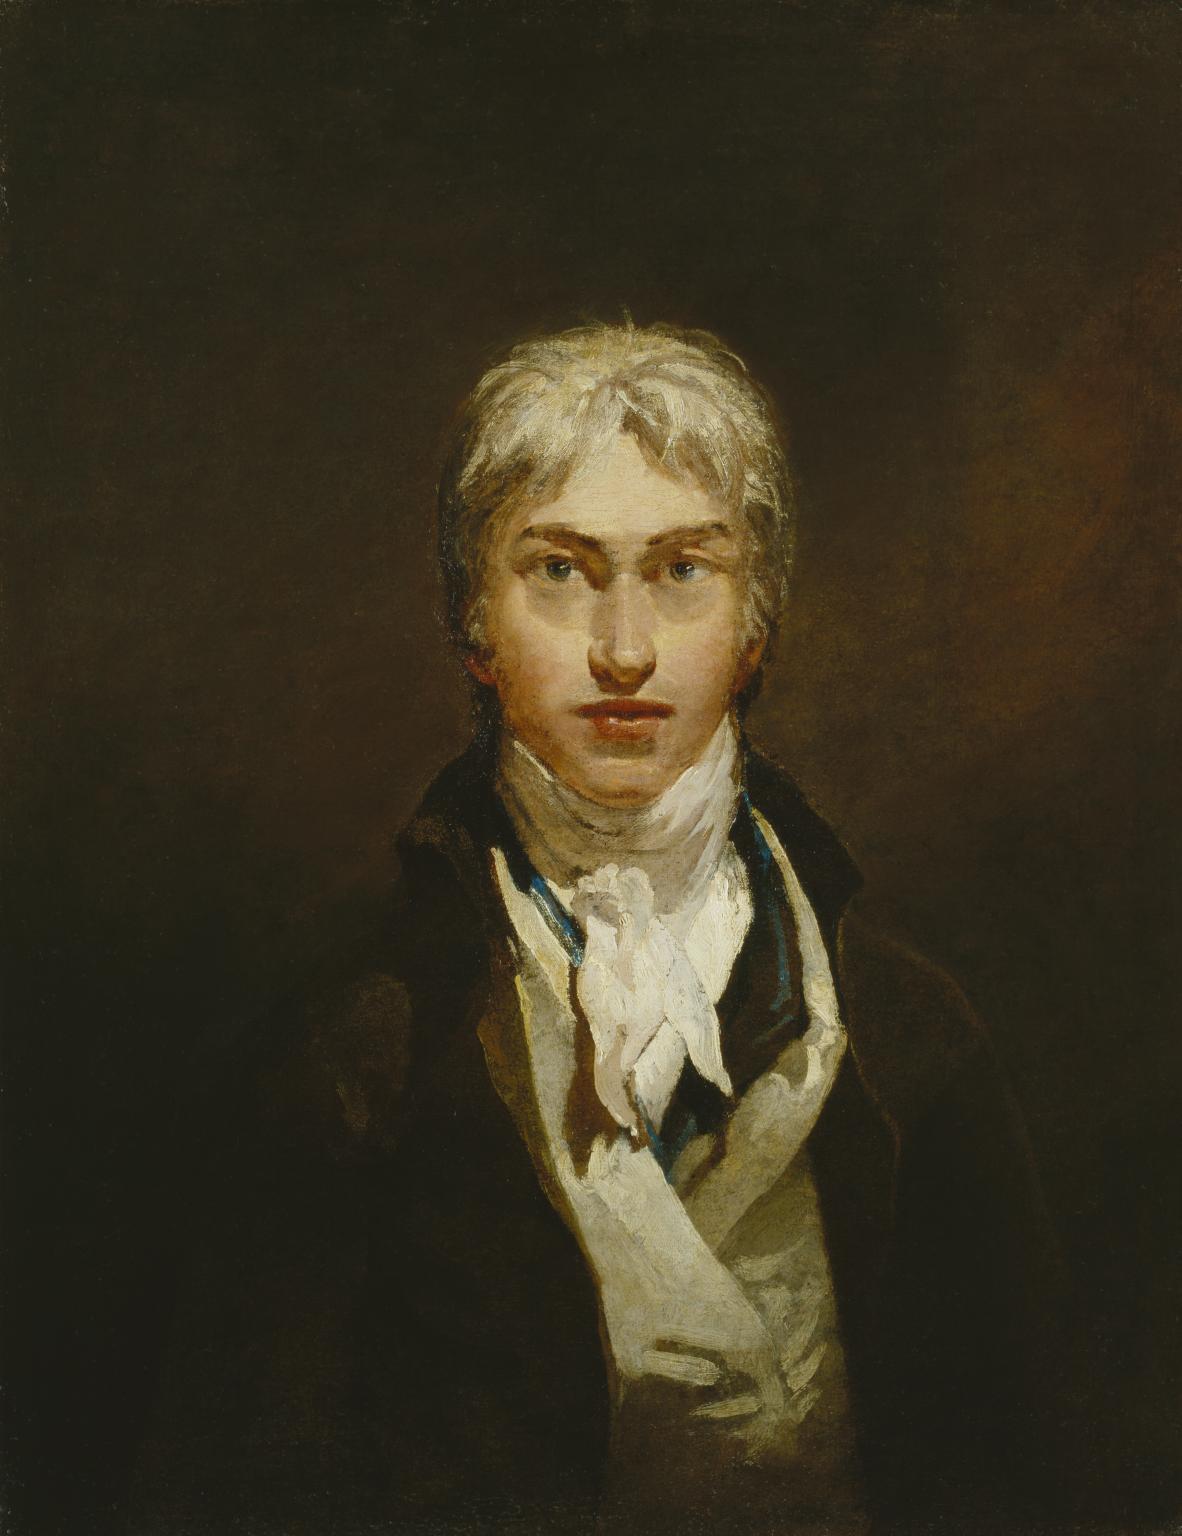 Joseph Mallord William Turner - 1775 - December 19, 1851